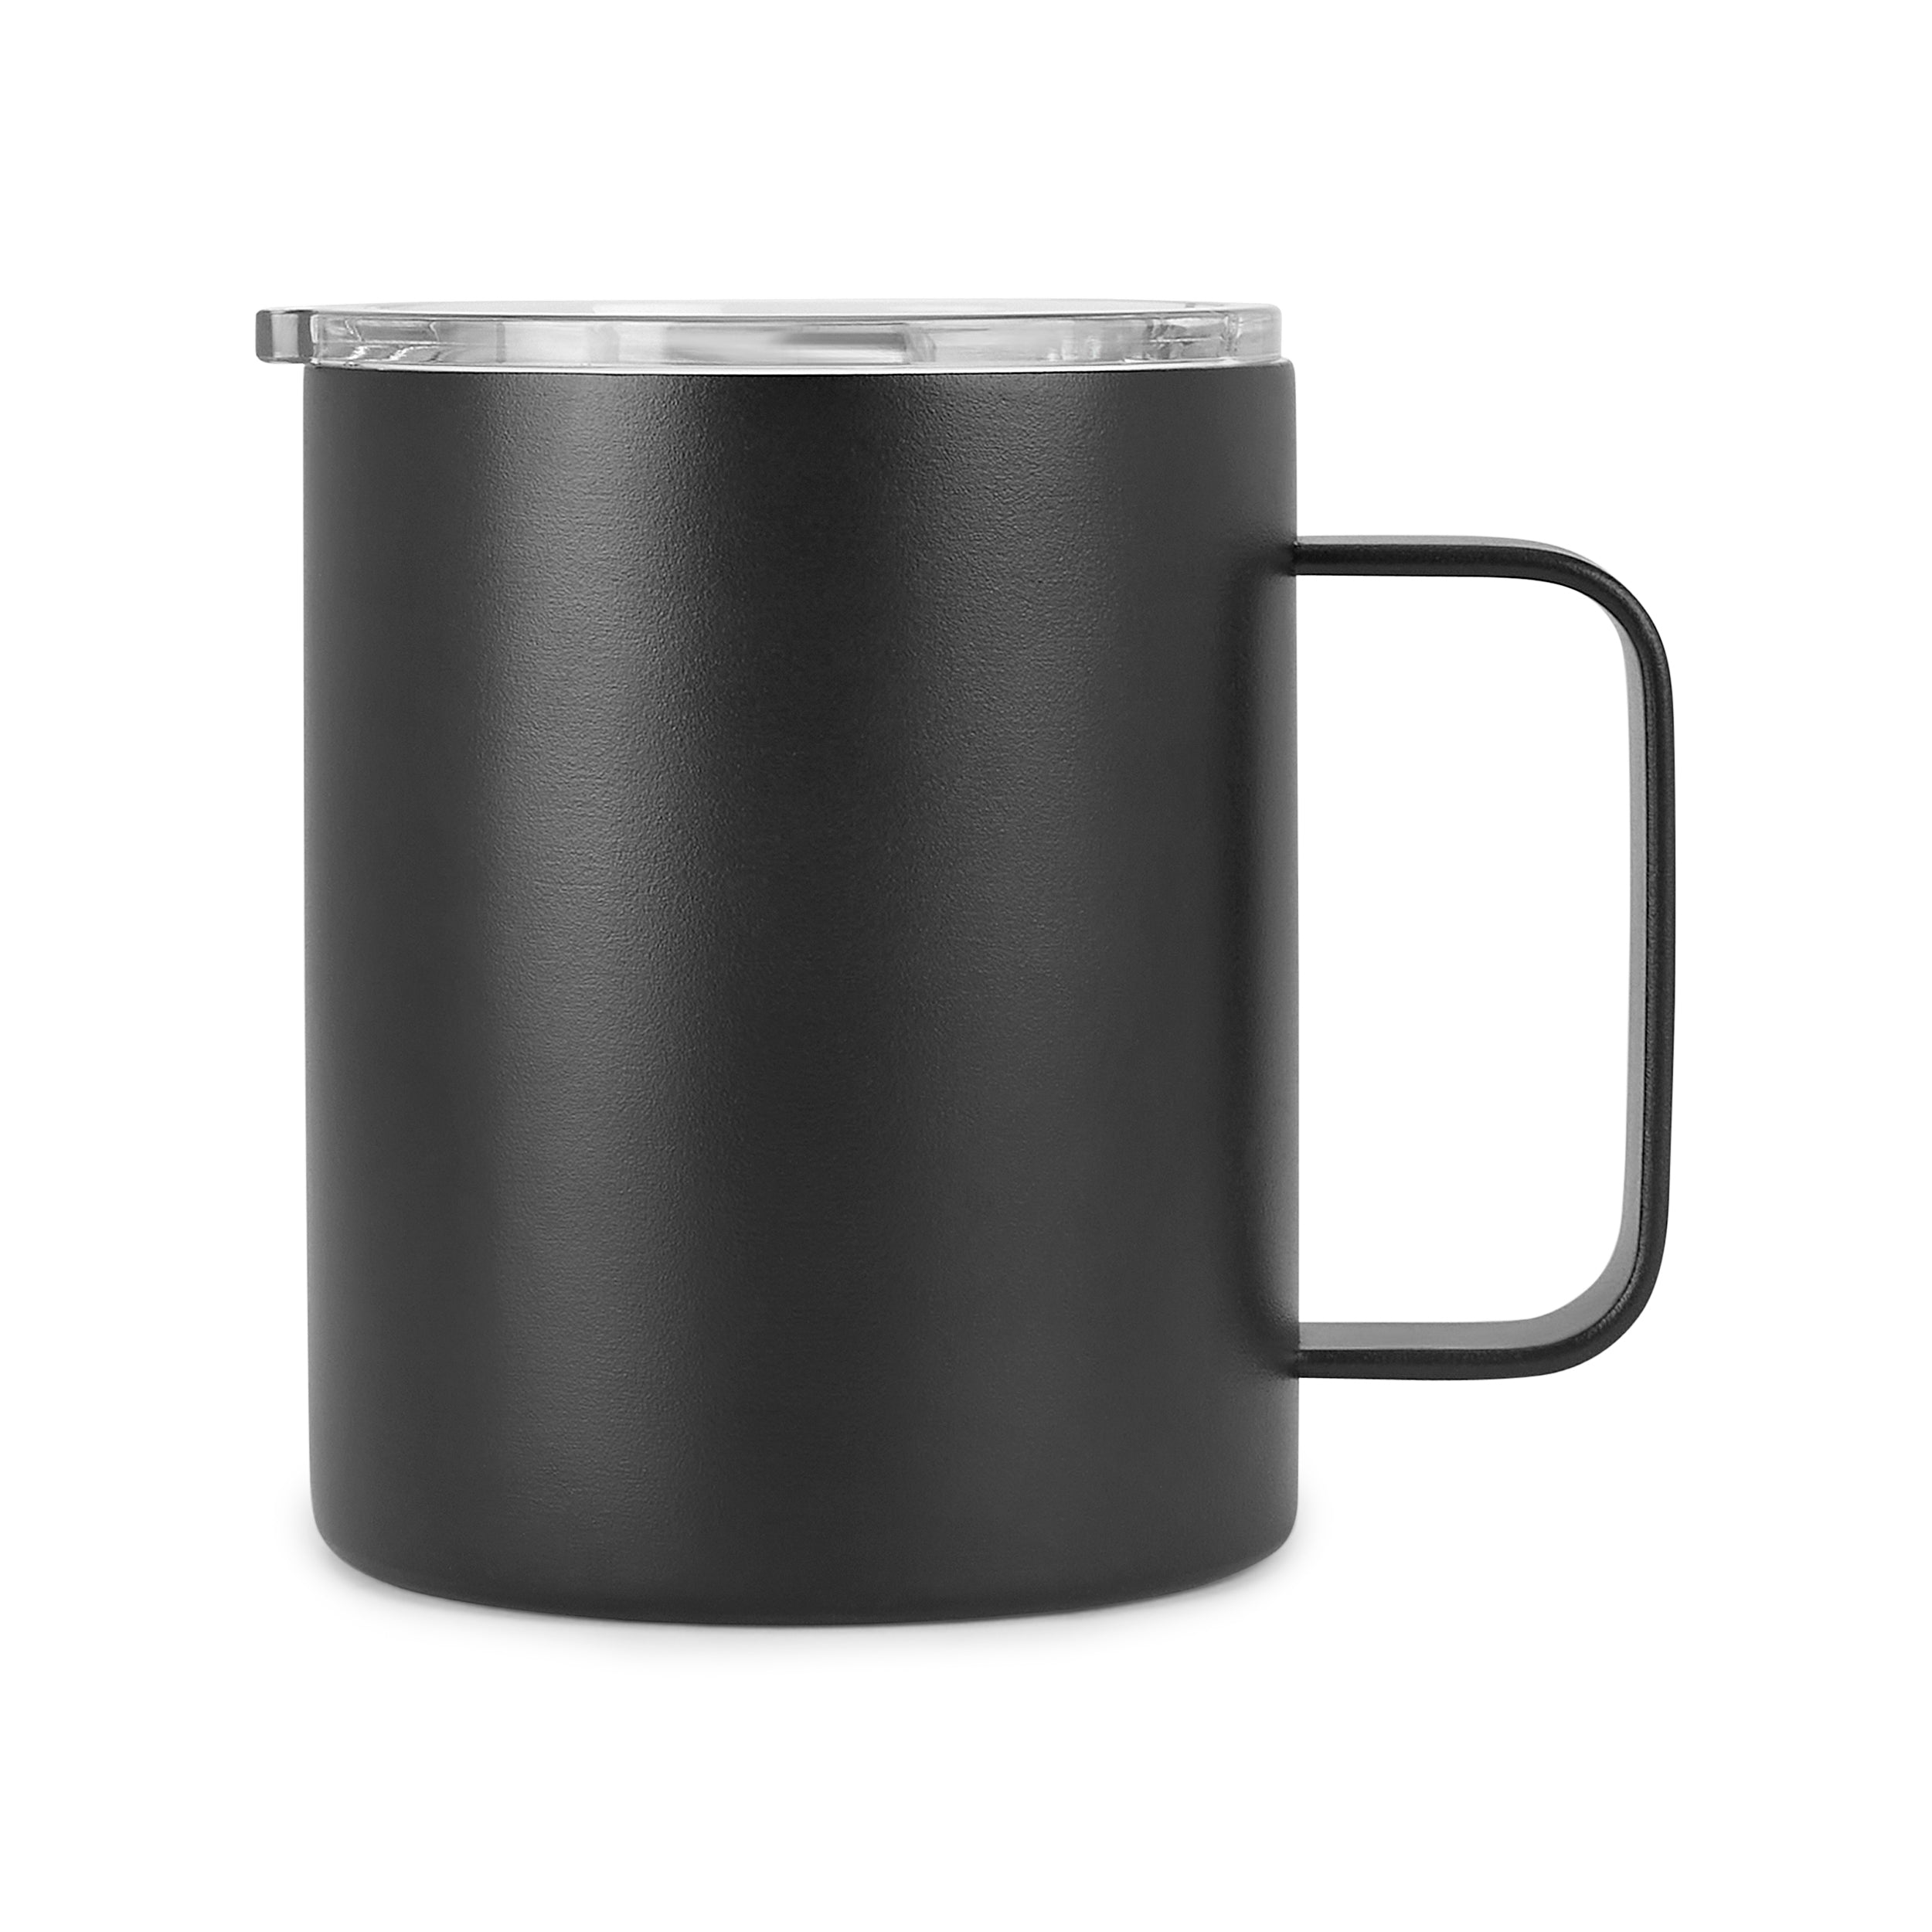 12oz Coffee Mug For Golf